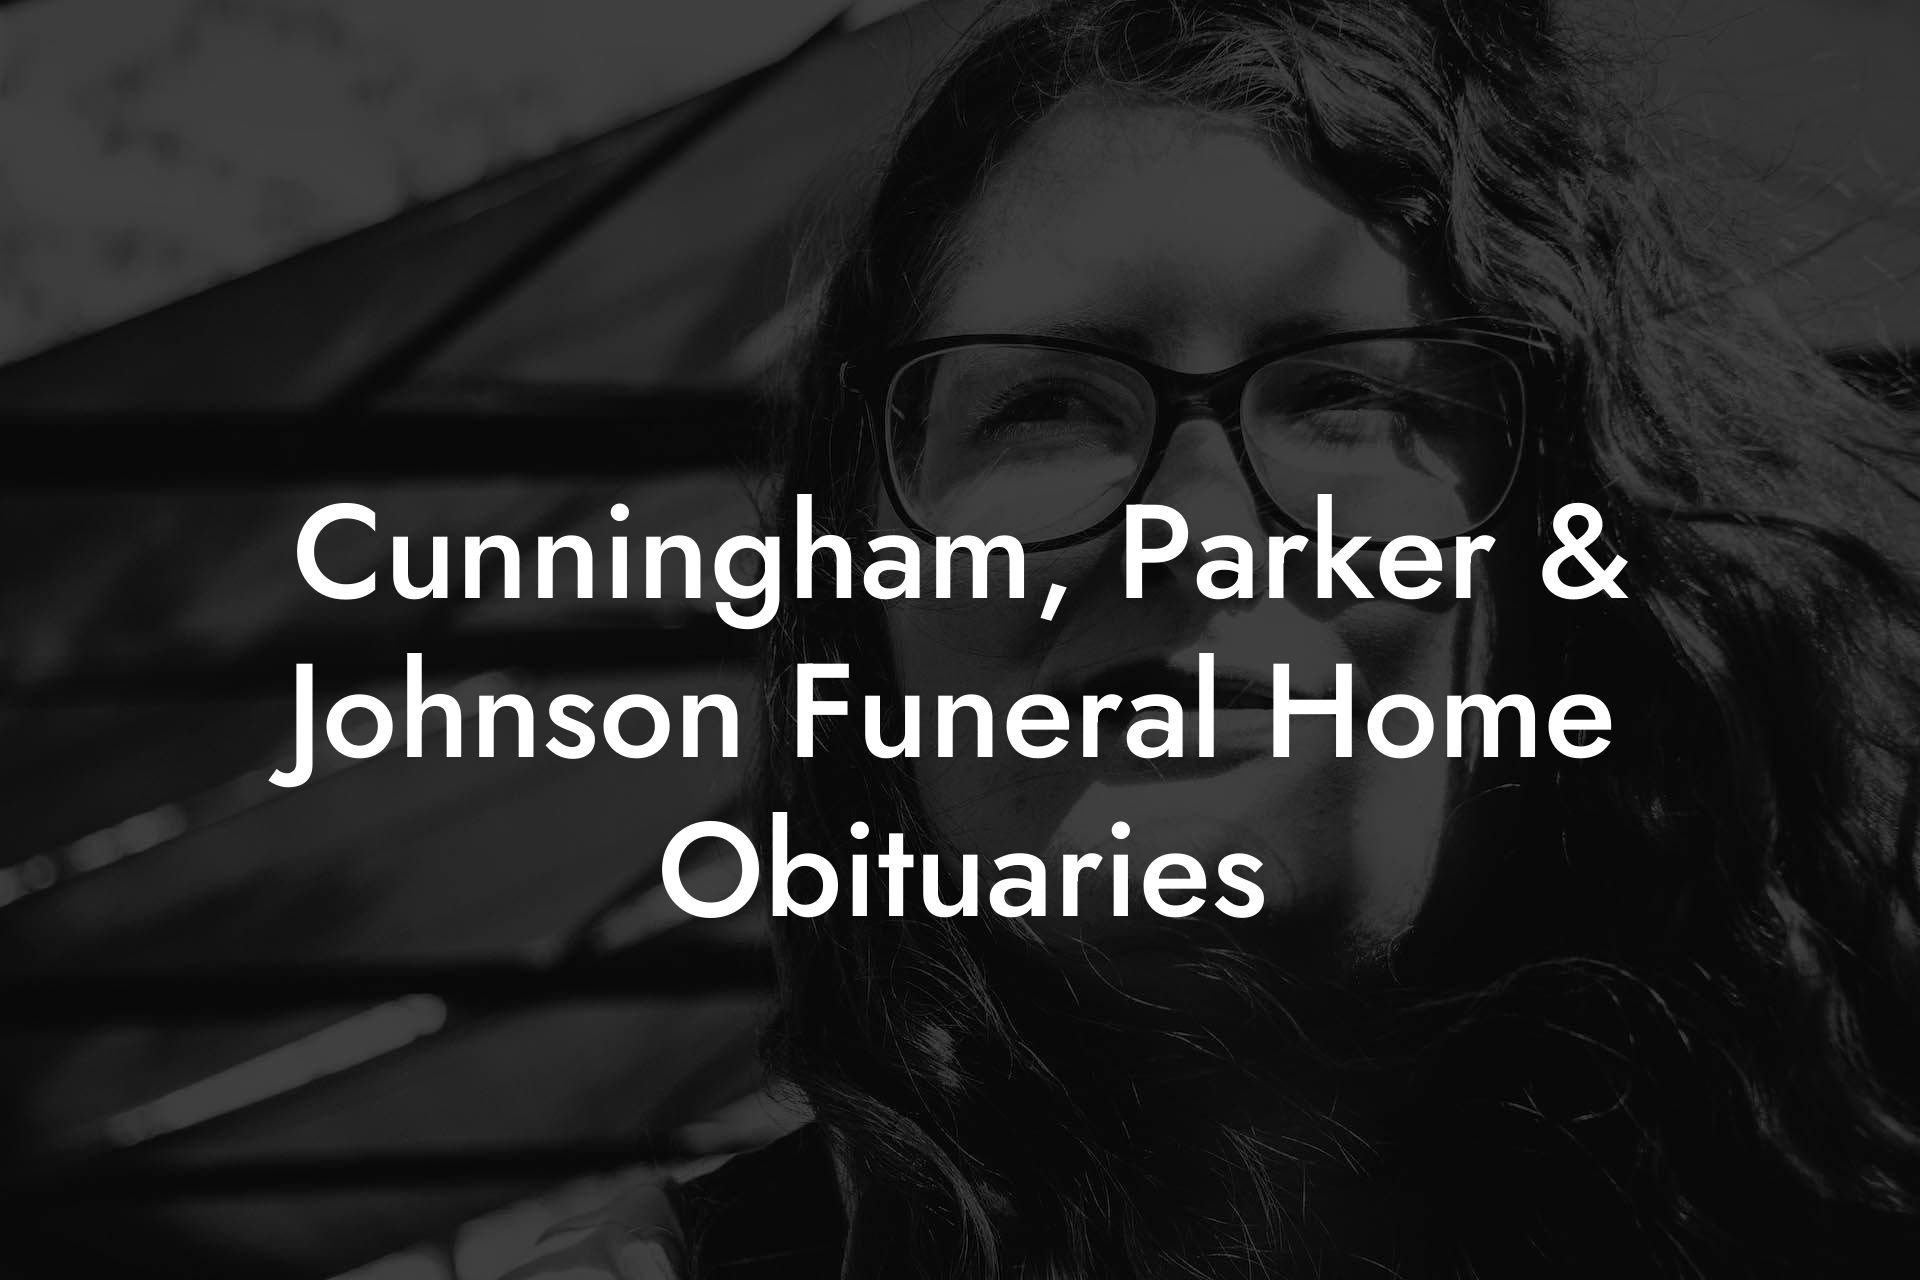 Cunningham, Parker & Johnson Funeral Home Obituaries